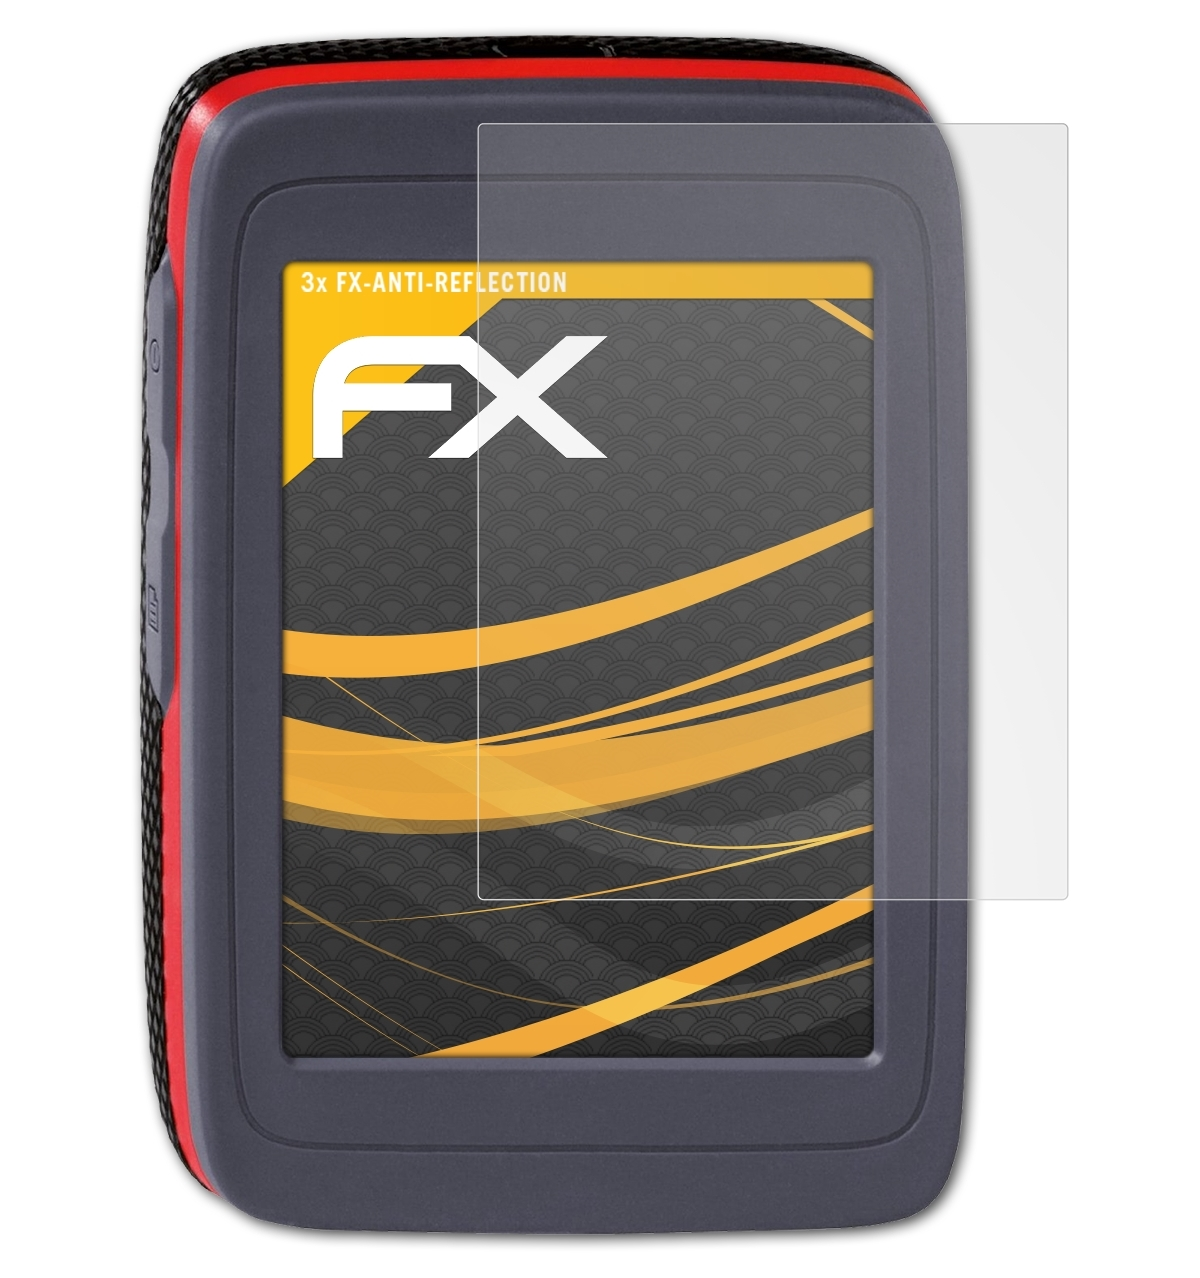 ATFOLIX 3x FX-Antireflex Displayschutz(für 40 IBEX Falk Cross)